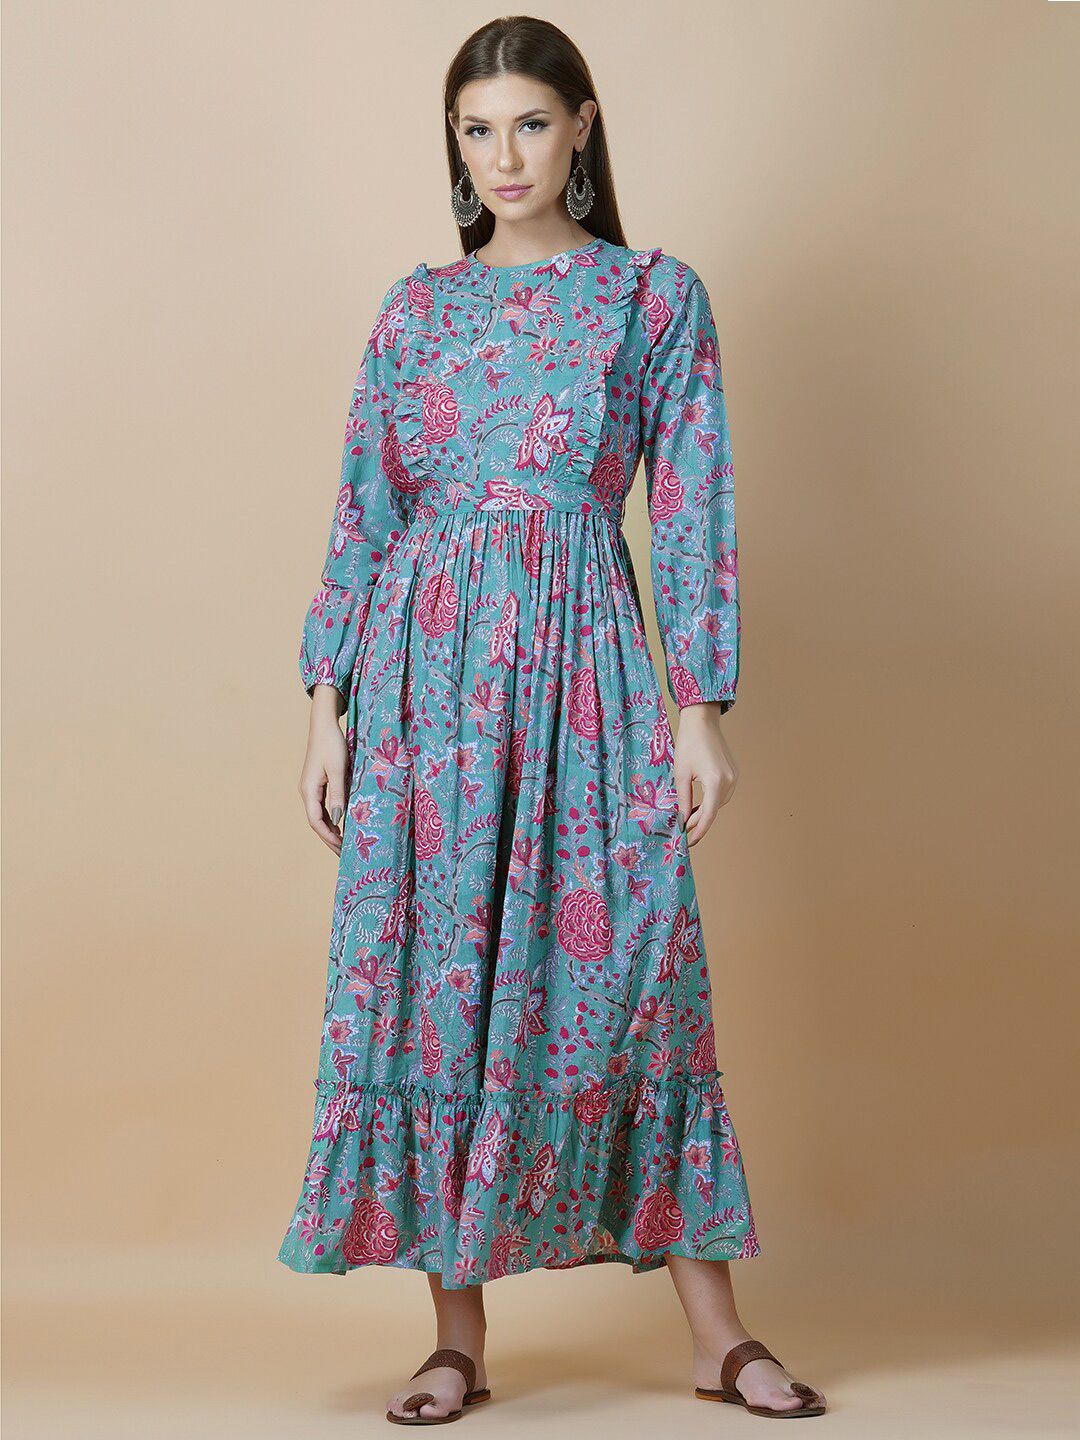 Twilldor Green Cotton Floral Ethnic Midi Dress Price in India